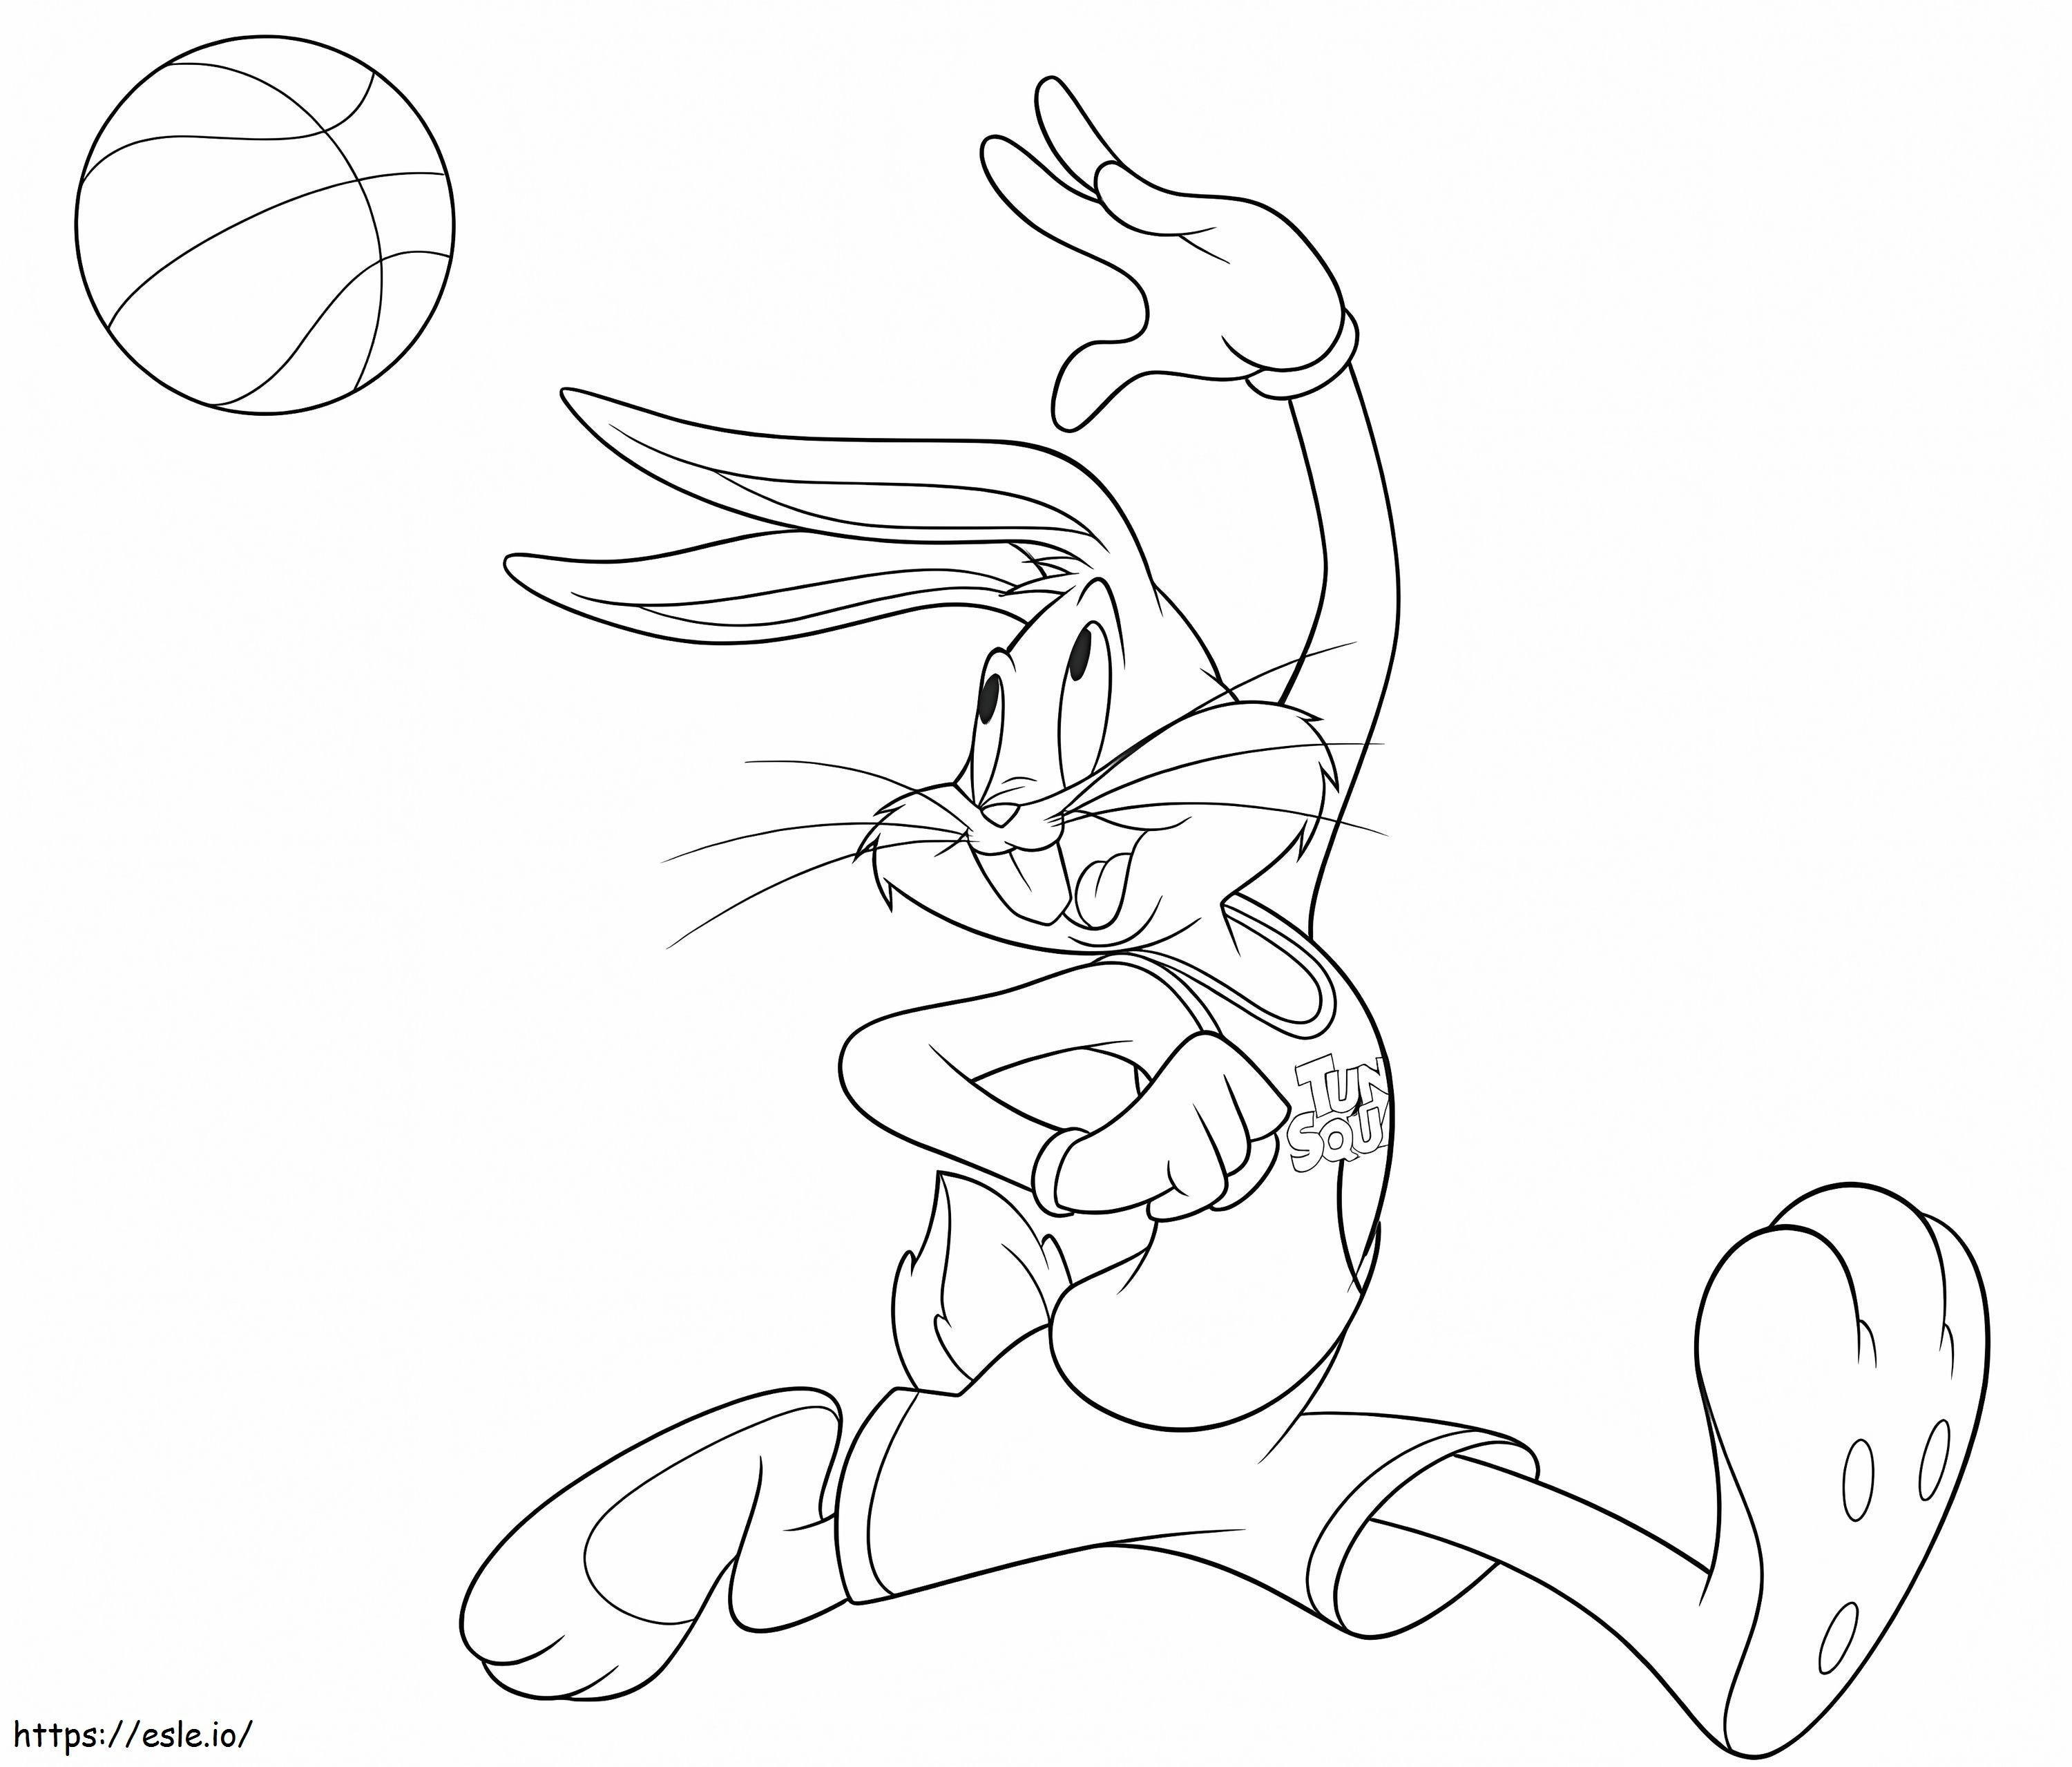 Menjalankan Bugs Bunny Bermain Bola Basket Gambar Mewarnai